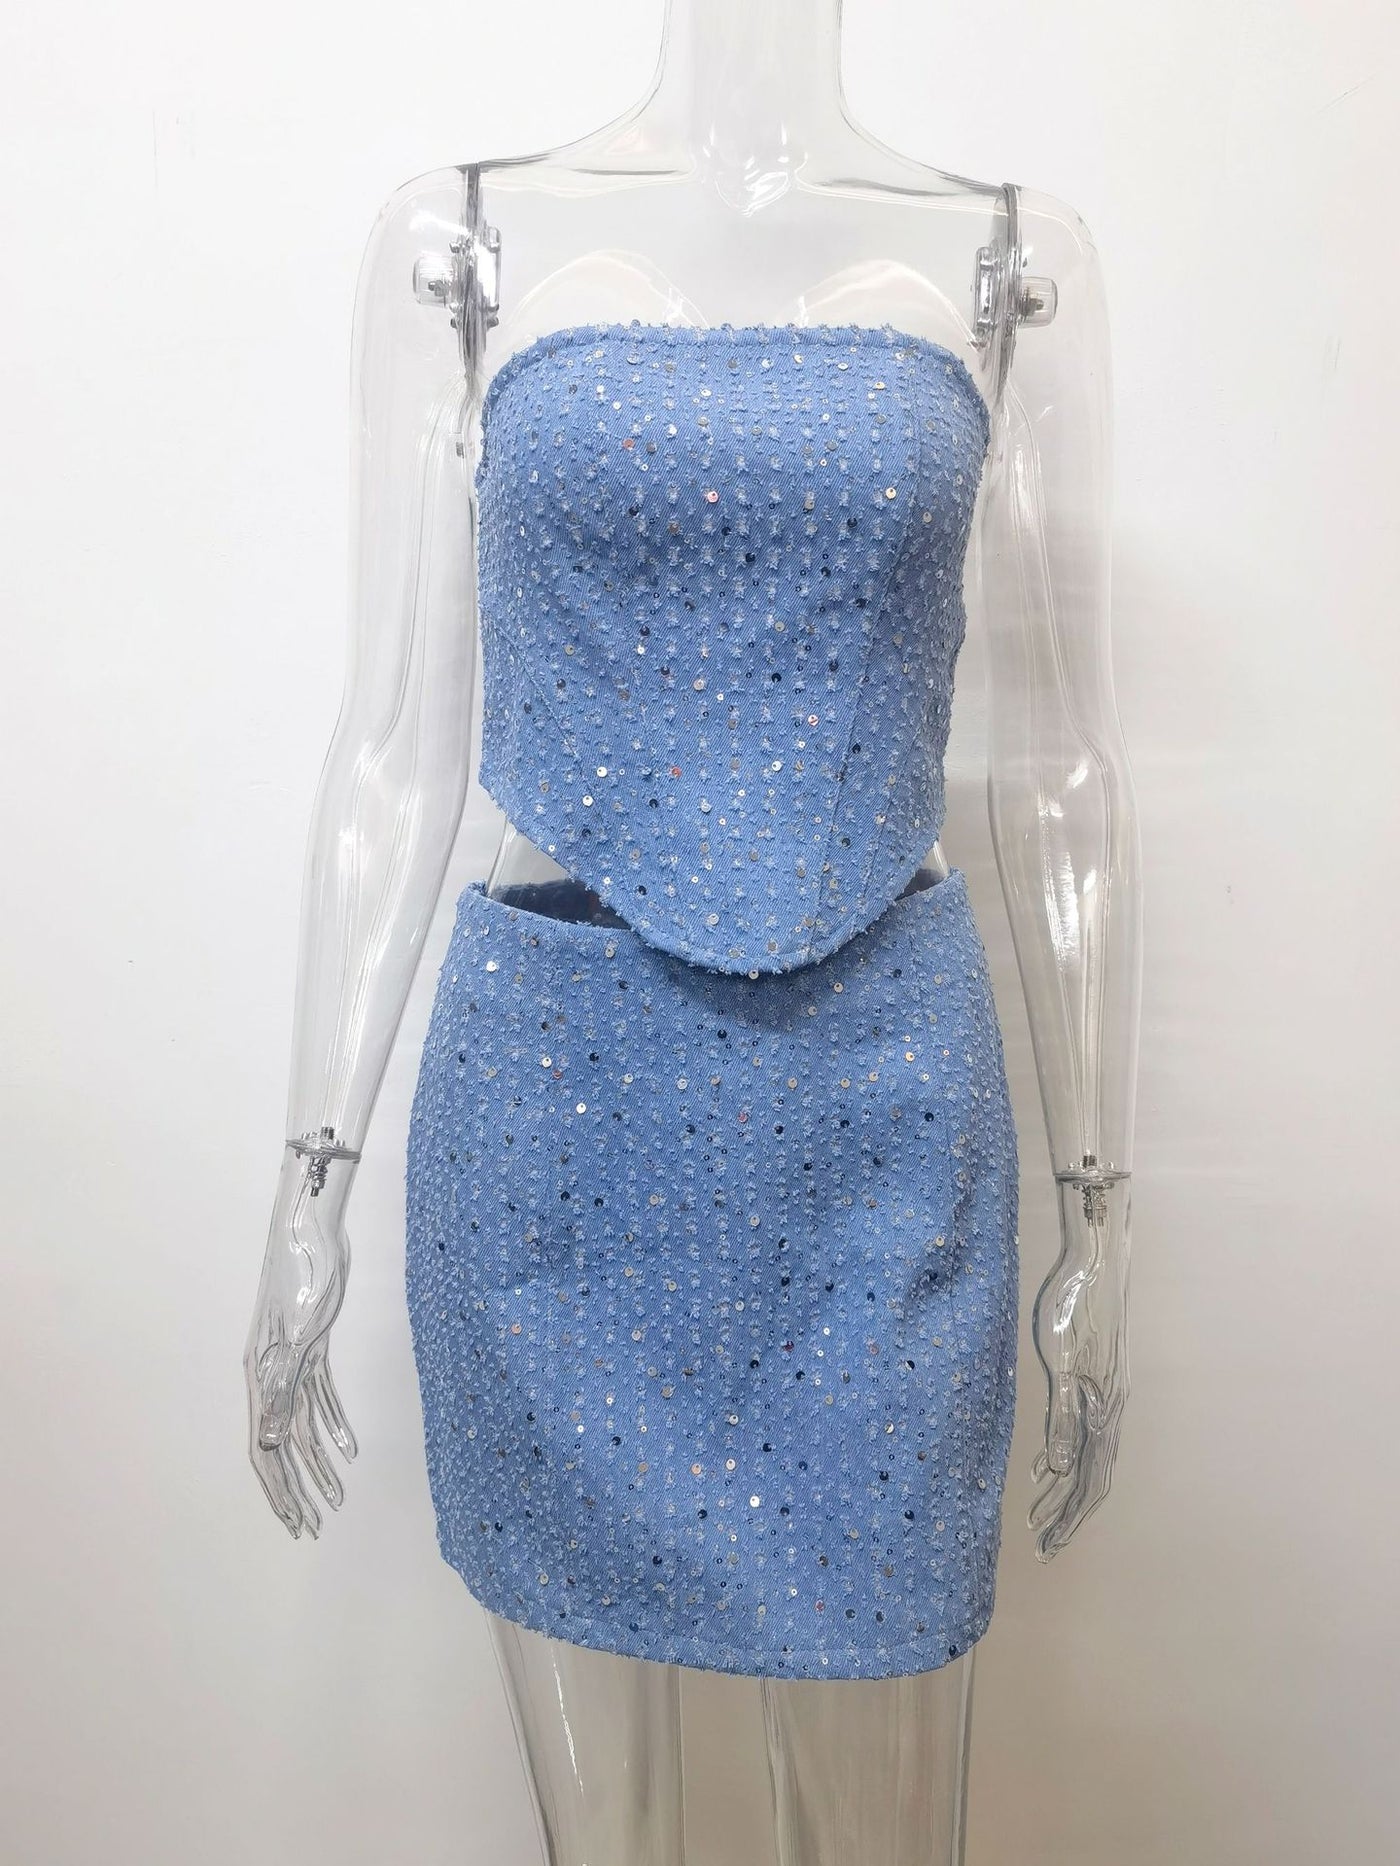 Martha Sequin Zipper Tube Top And Mini Skirt Set - Hot fashionista